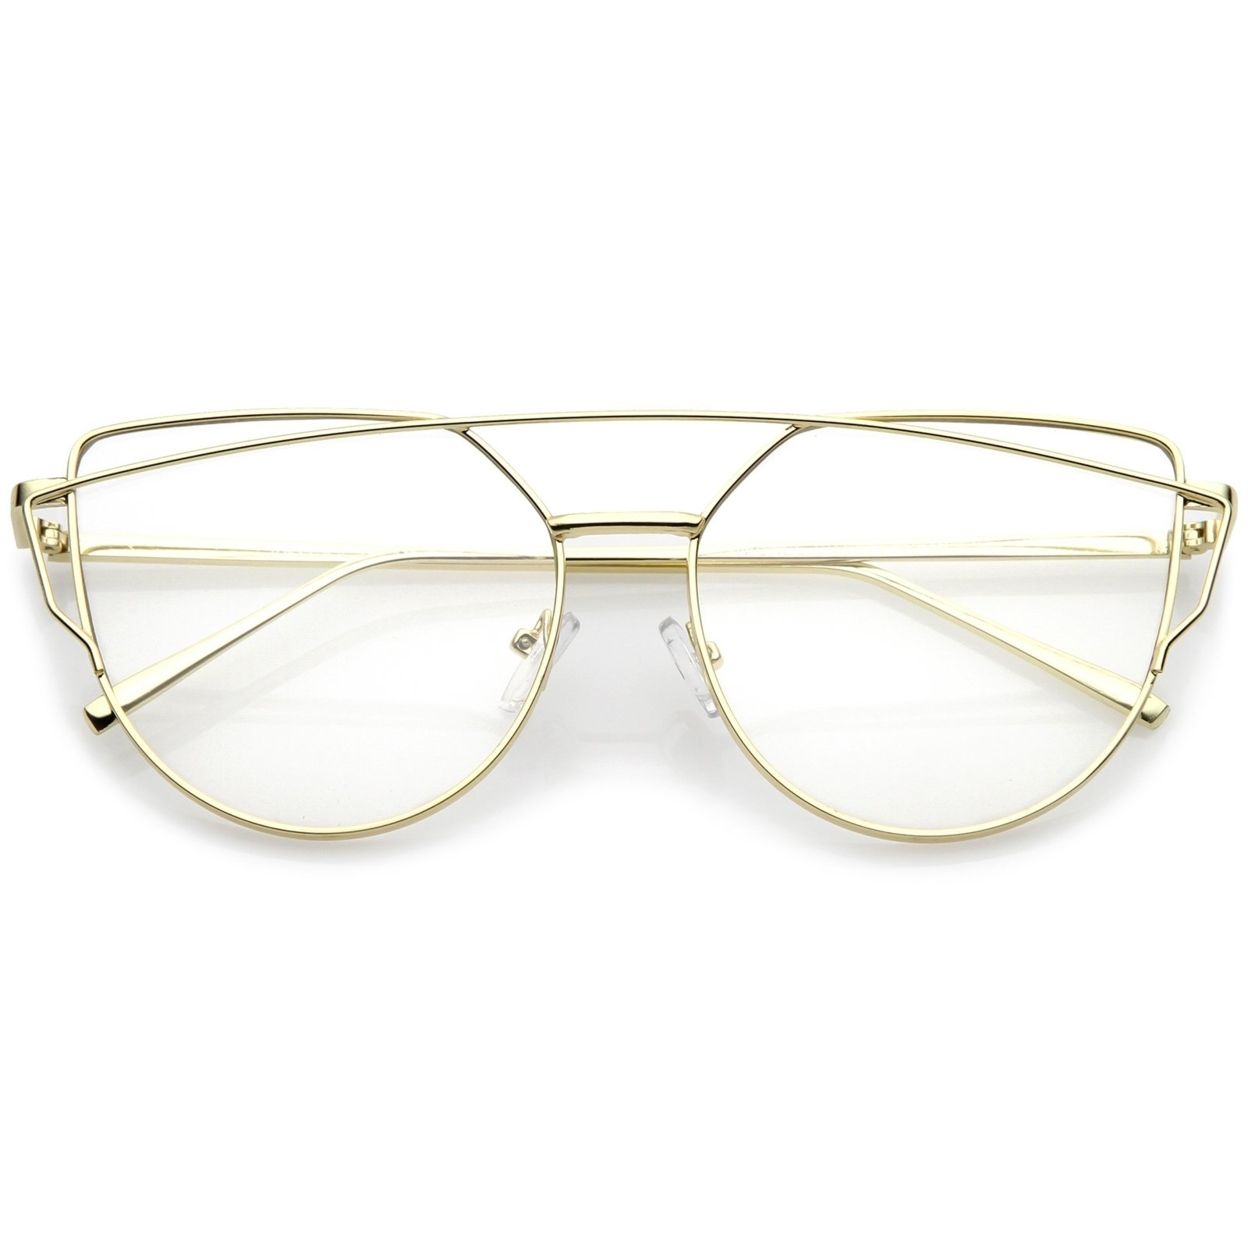 Modern Slim Metal Frame Crossbar Clear Flat Lens Aviator Eyeglasses 55mm - Gold / Clear